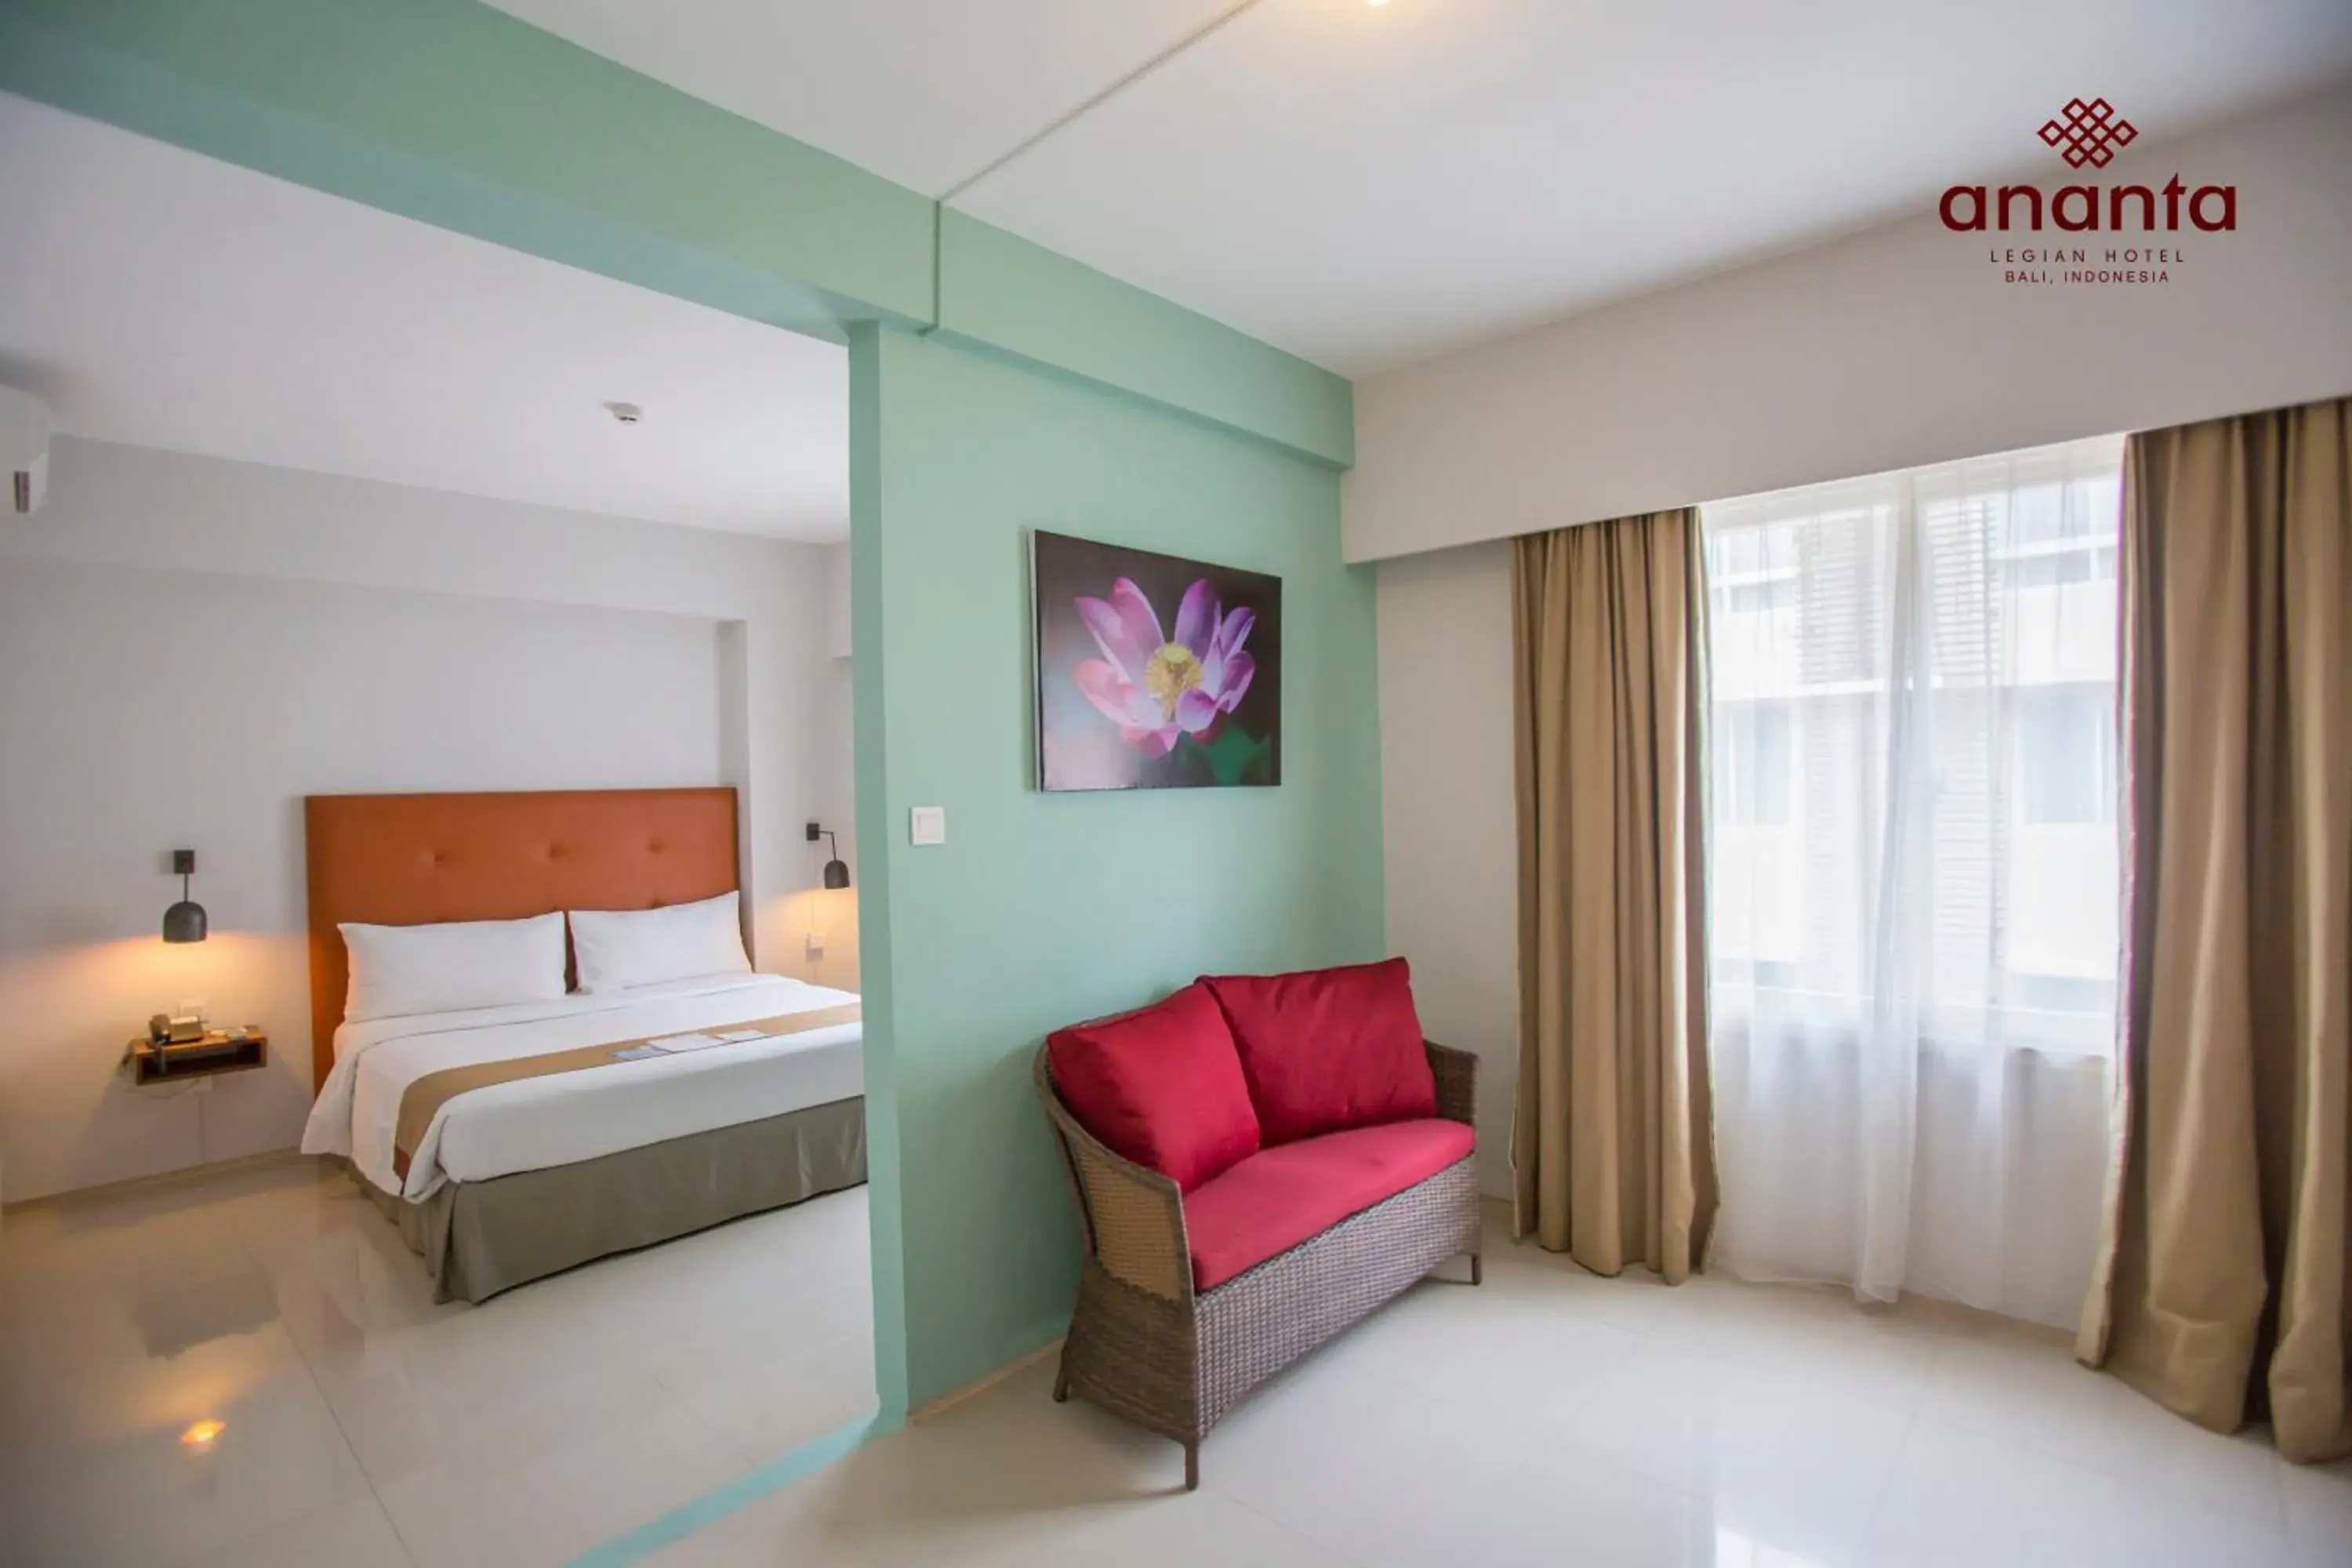 Bed in Ananta Legian Hotel